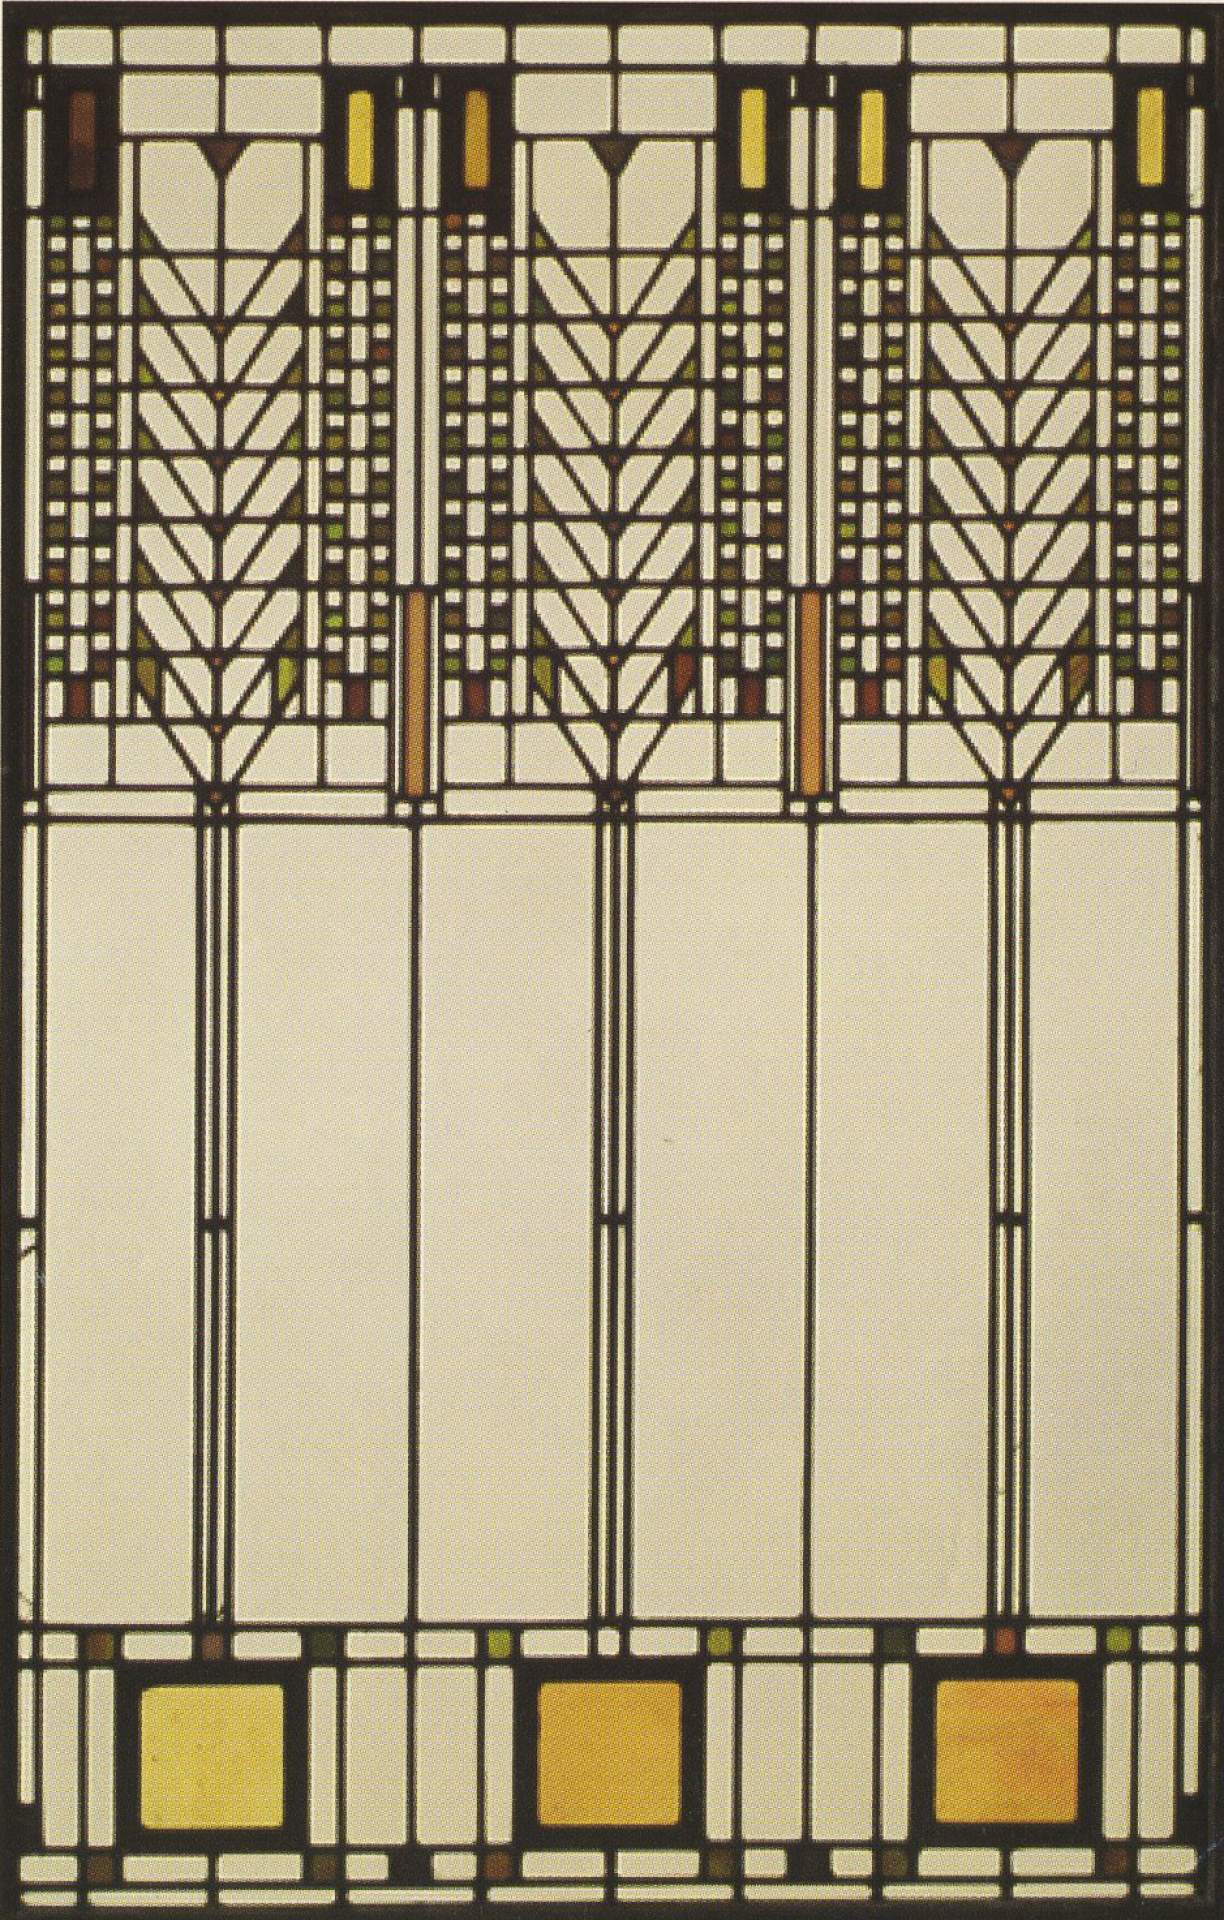 Frank Lloyd Wright / Windows from the Darwin D. Martin Complex